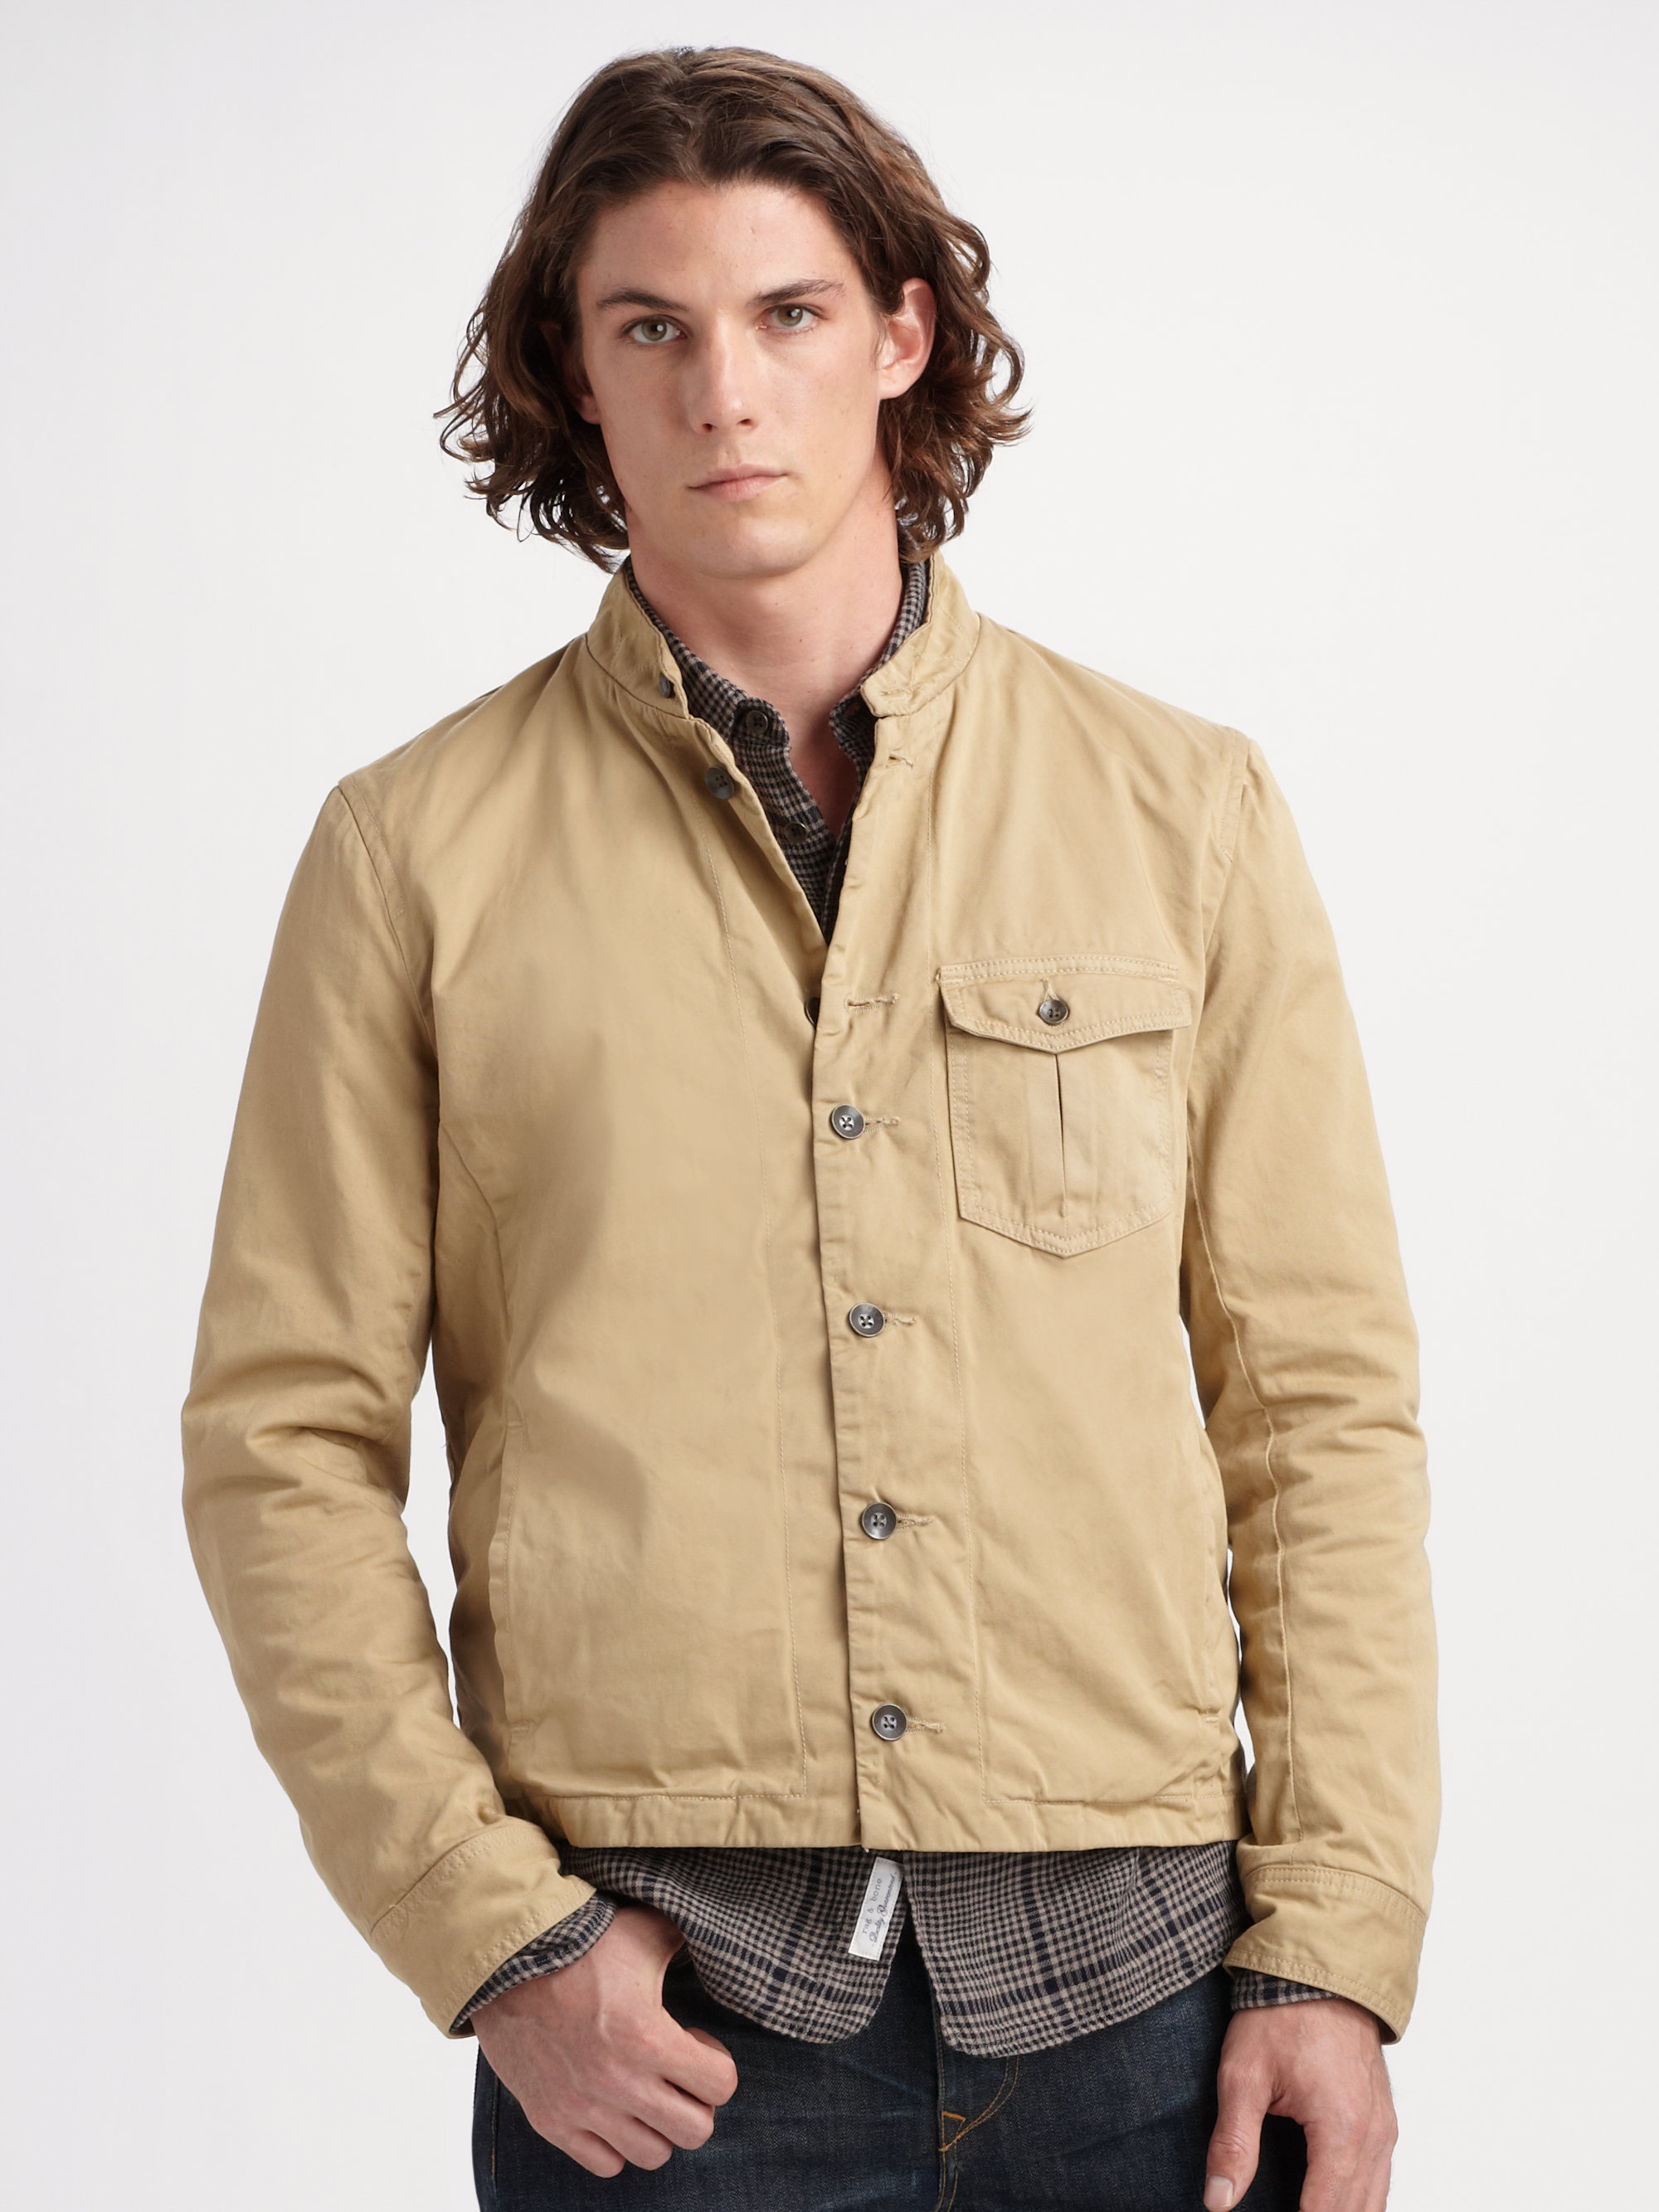 Rag & bone Kennington Twill Shirt Jacket in Natural for Men | Lyst